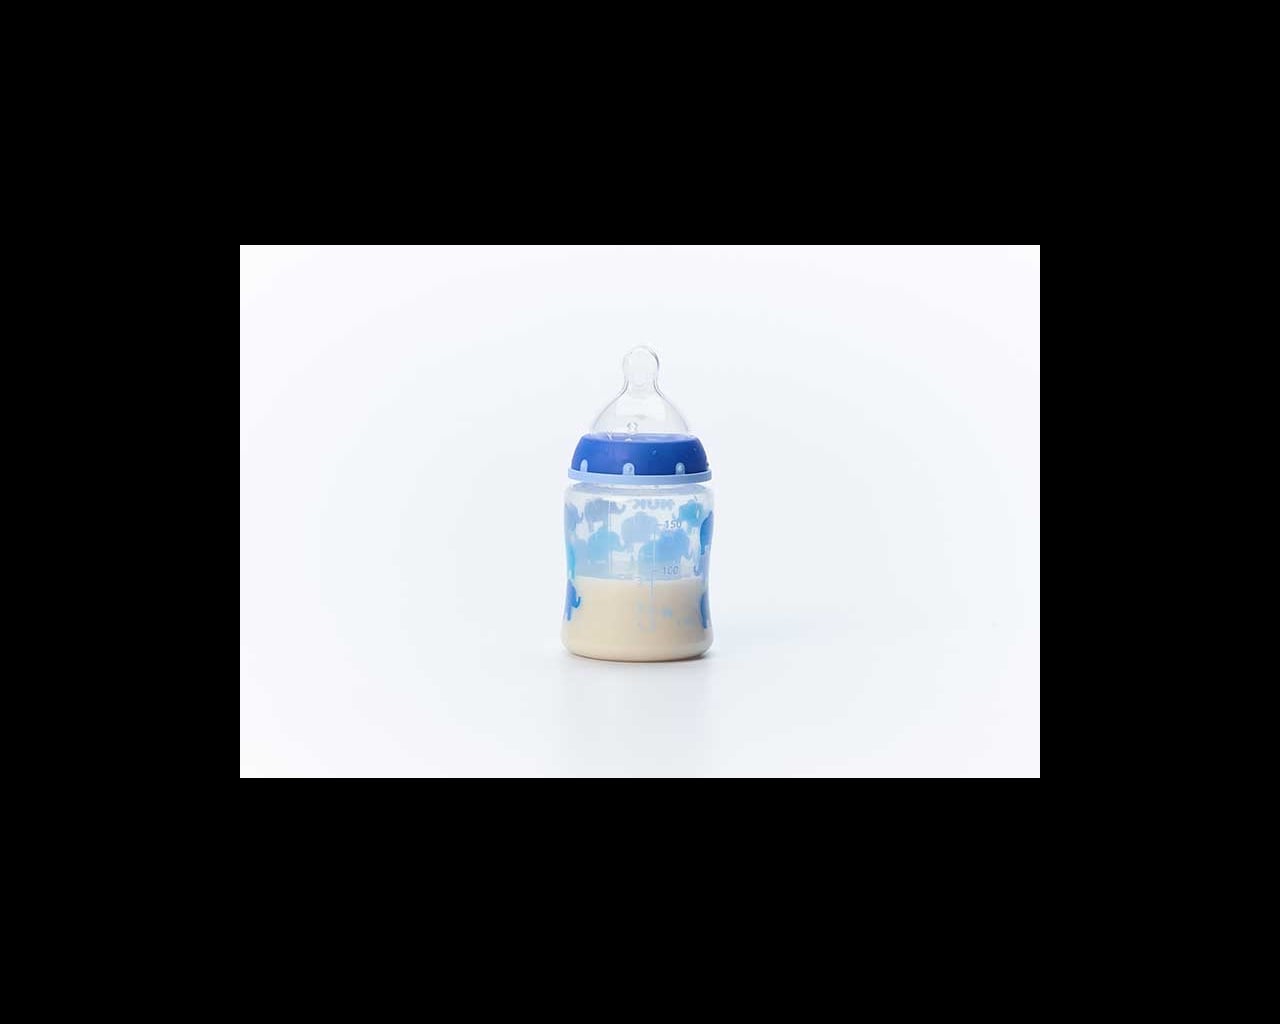 3 ounce bottle of breastmilk or formula